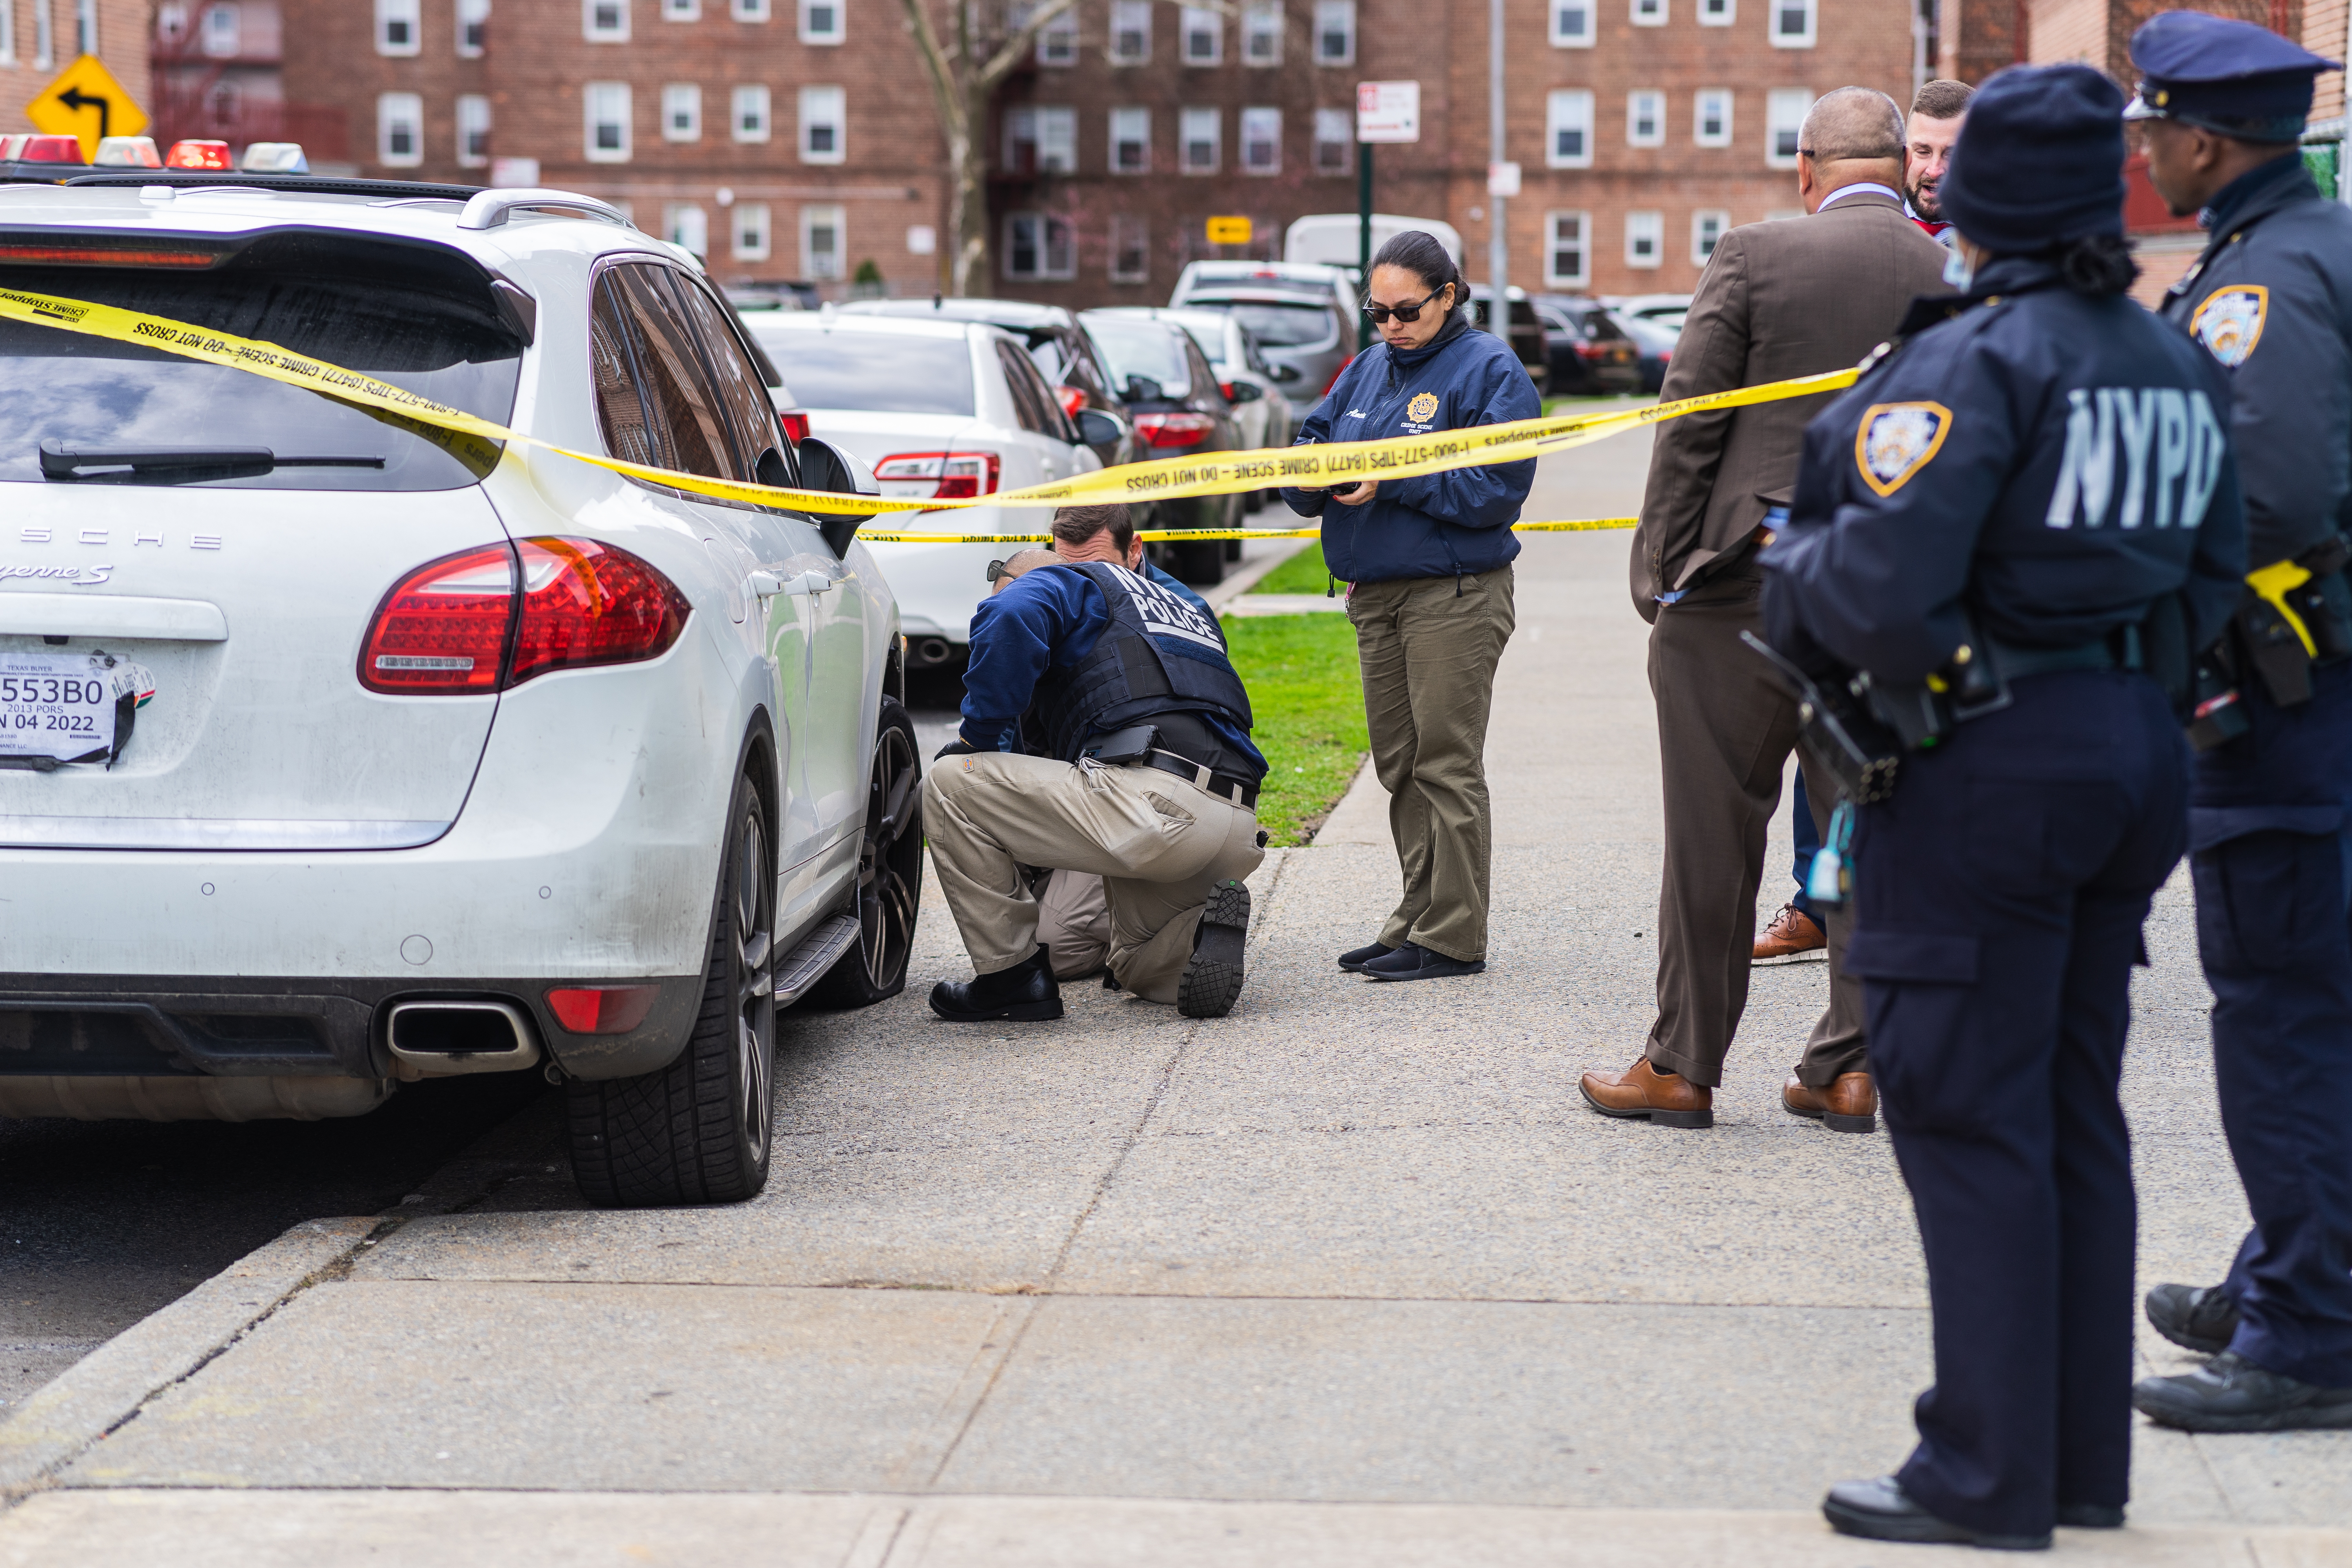 Cops at the crime scene | Source: Shutterstock